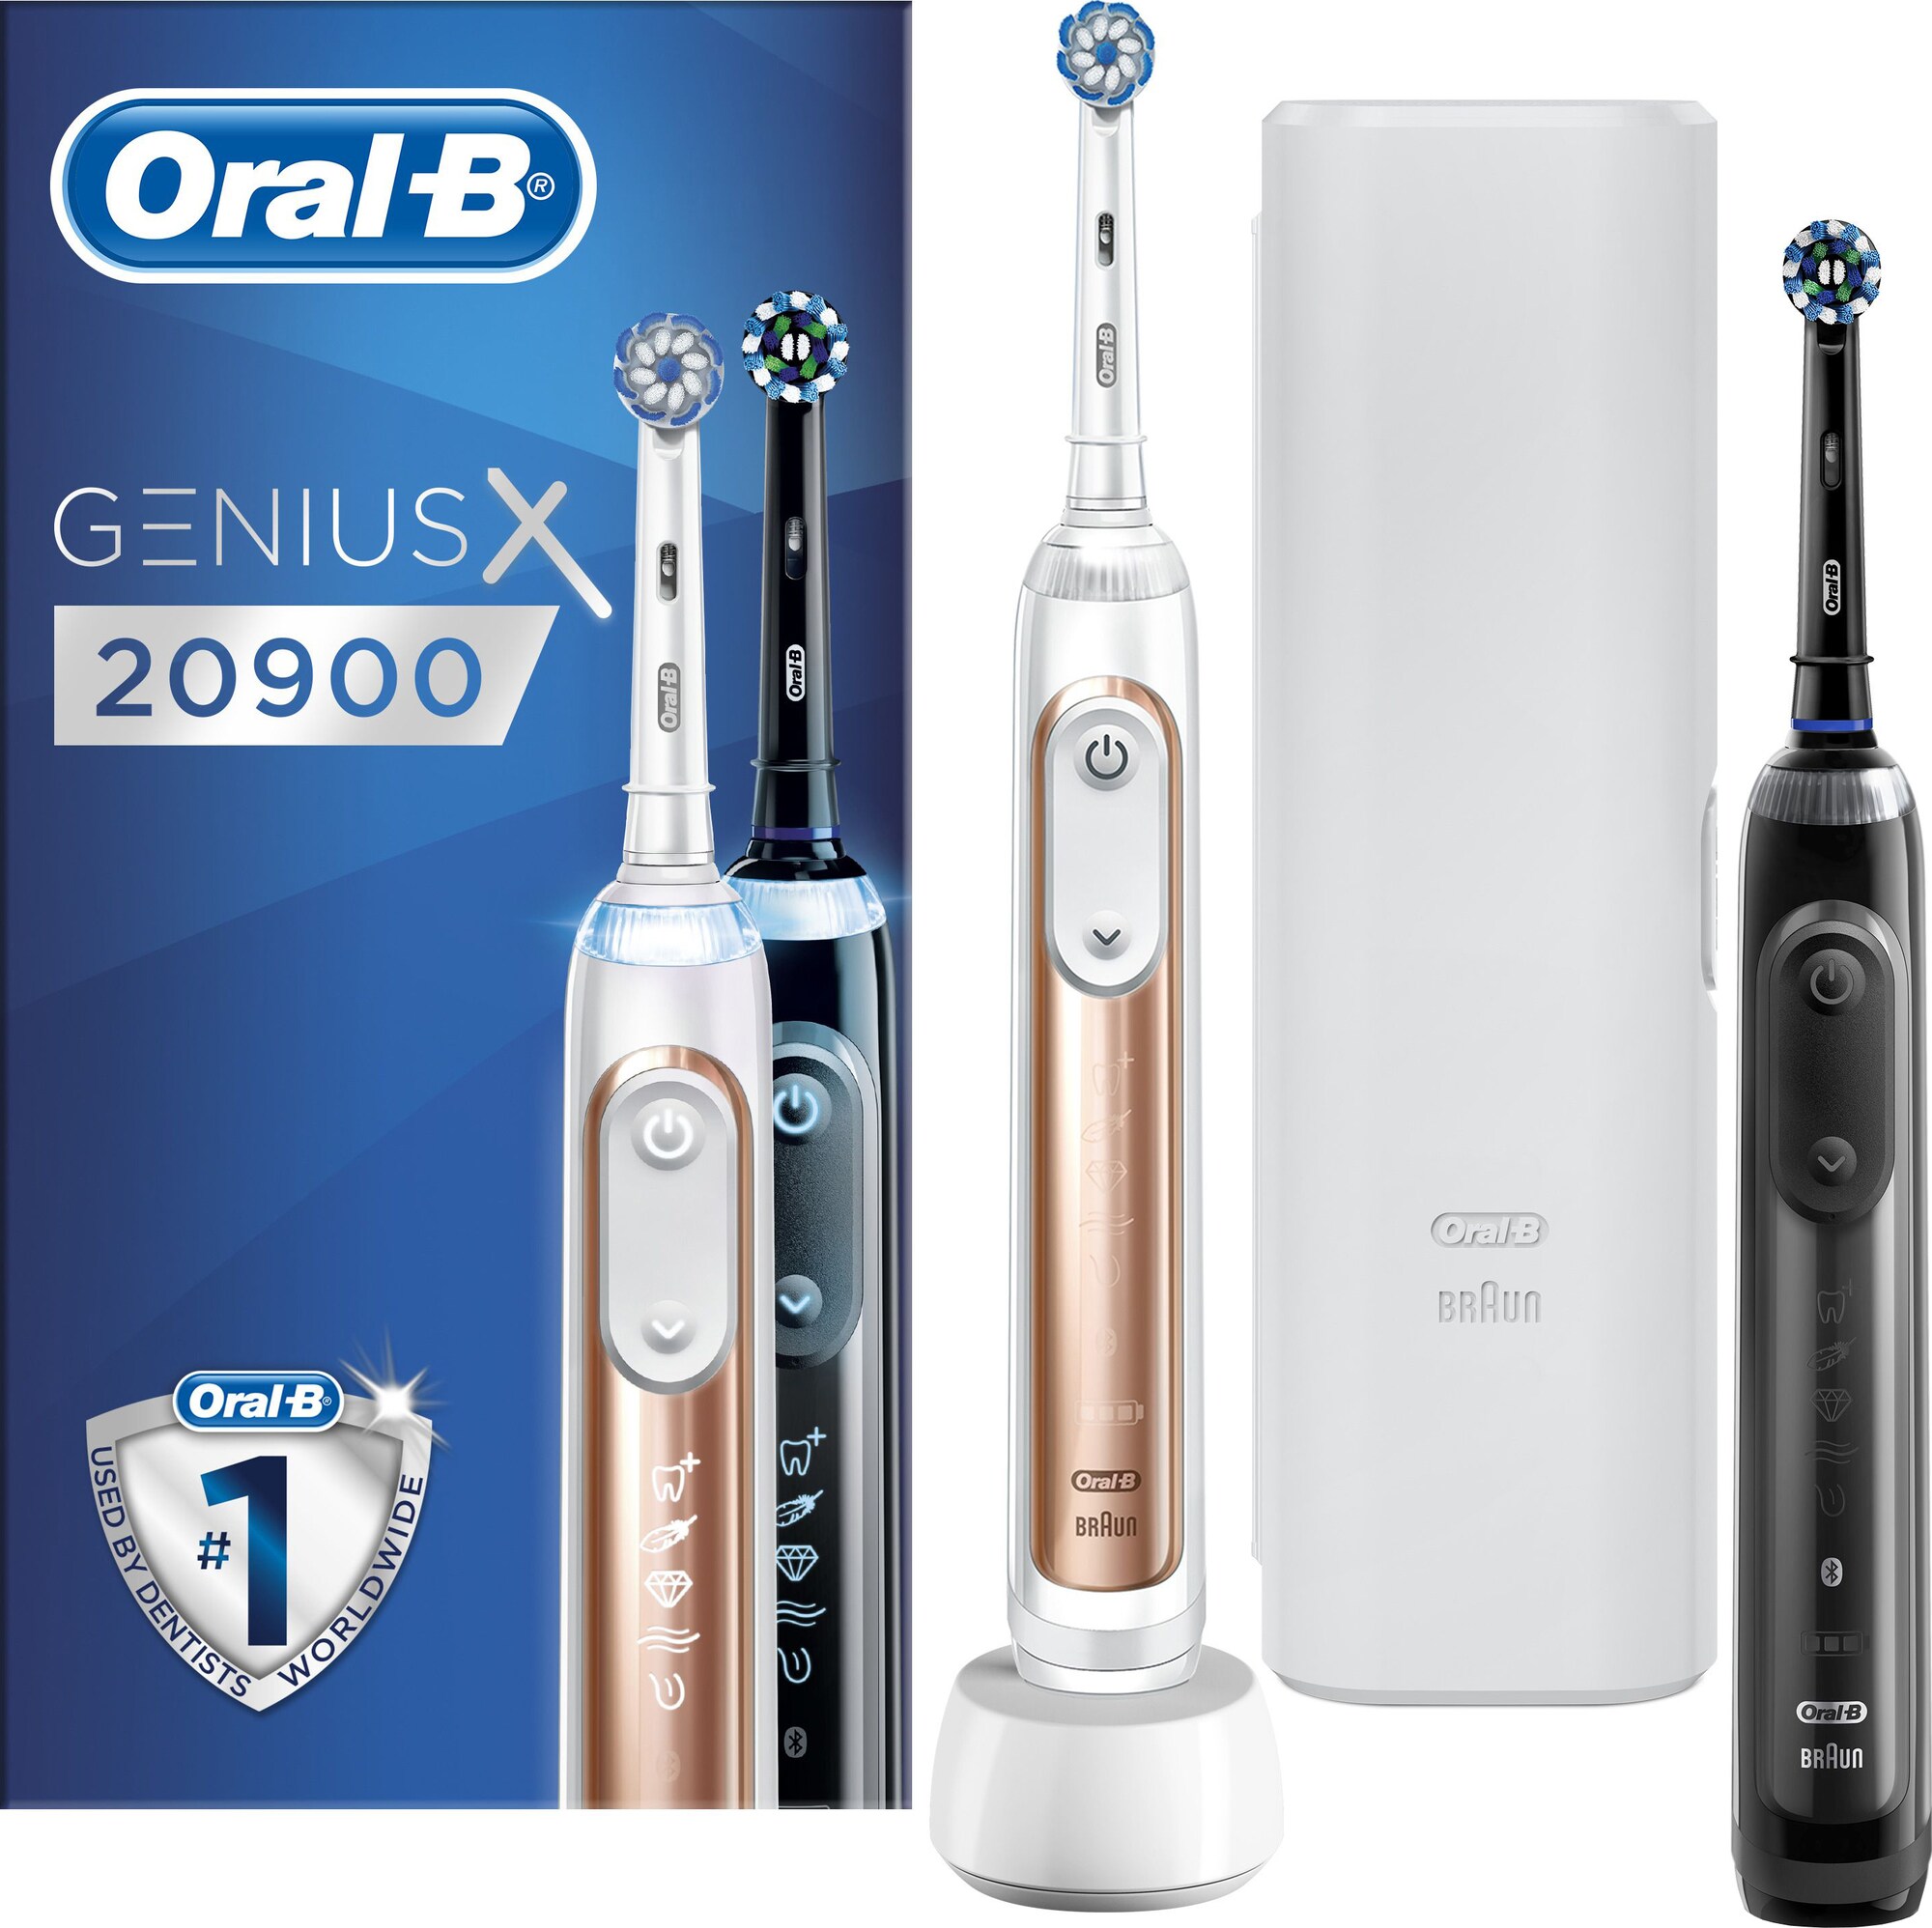 Oral-B Genius X elektrisk tandborste Double Body specialutgåva 20900 -  Elgiganten